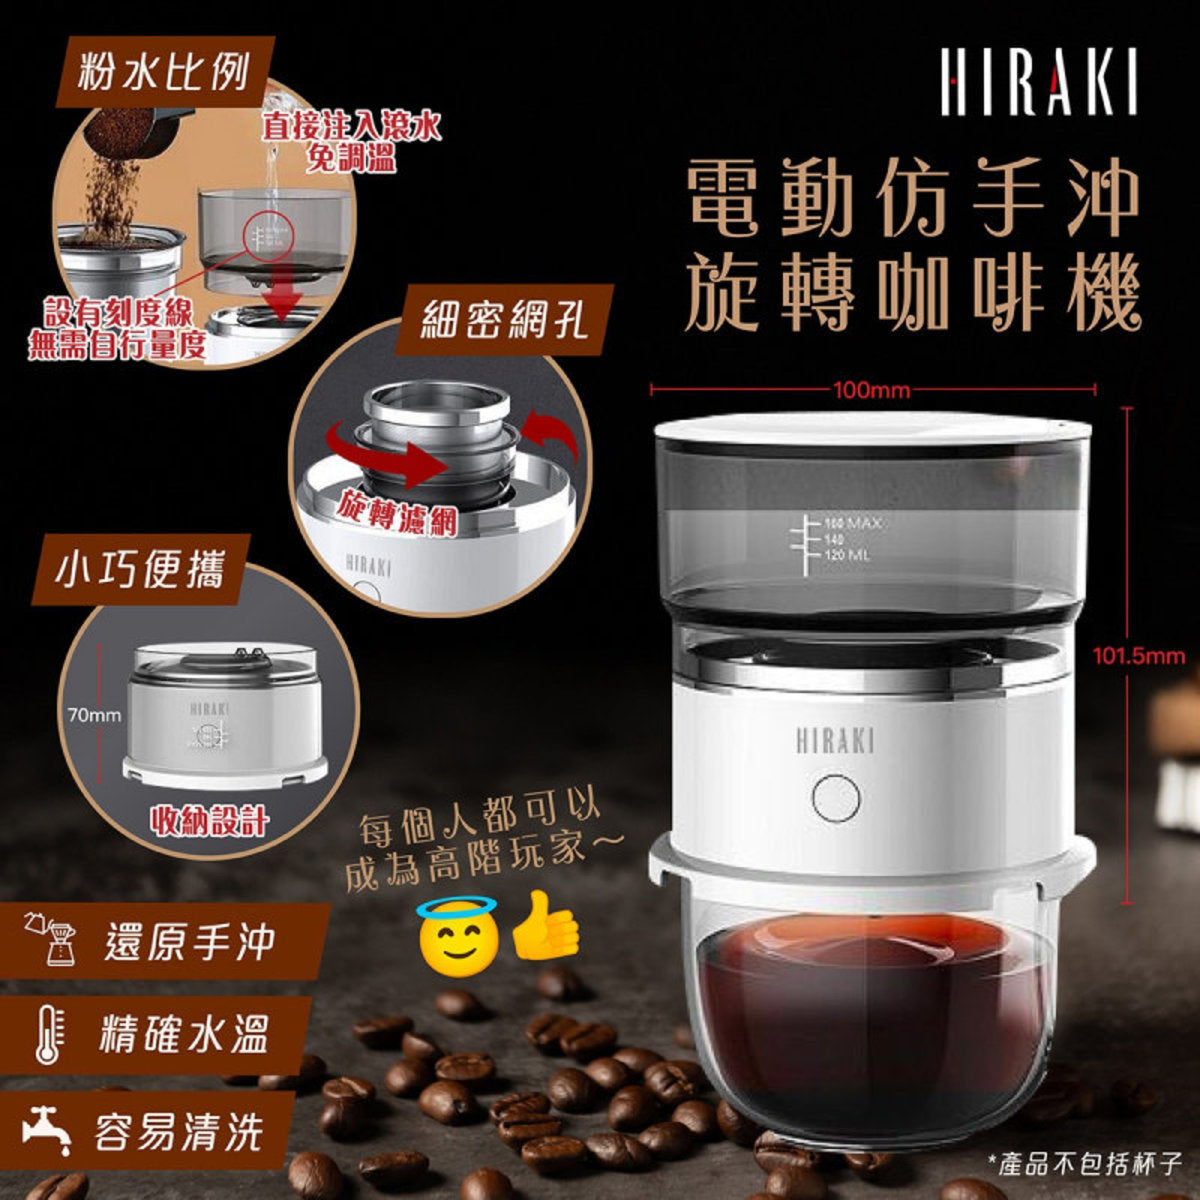 HIRAKI - Portable hand-brewed coffee machine S360 | Coffee machine | Hand-brewed coffee | Portable coffee machine